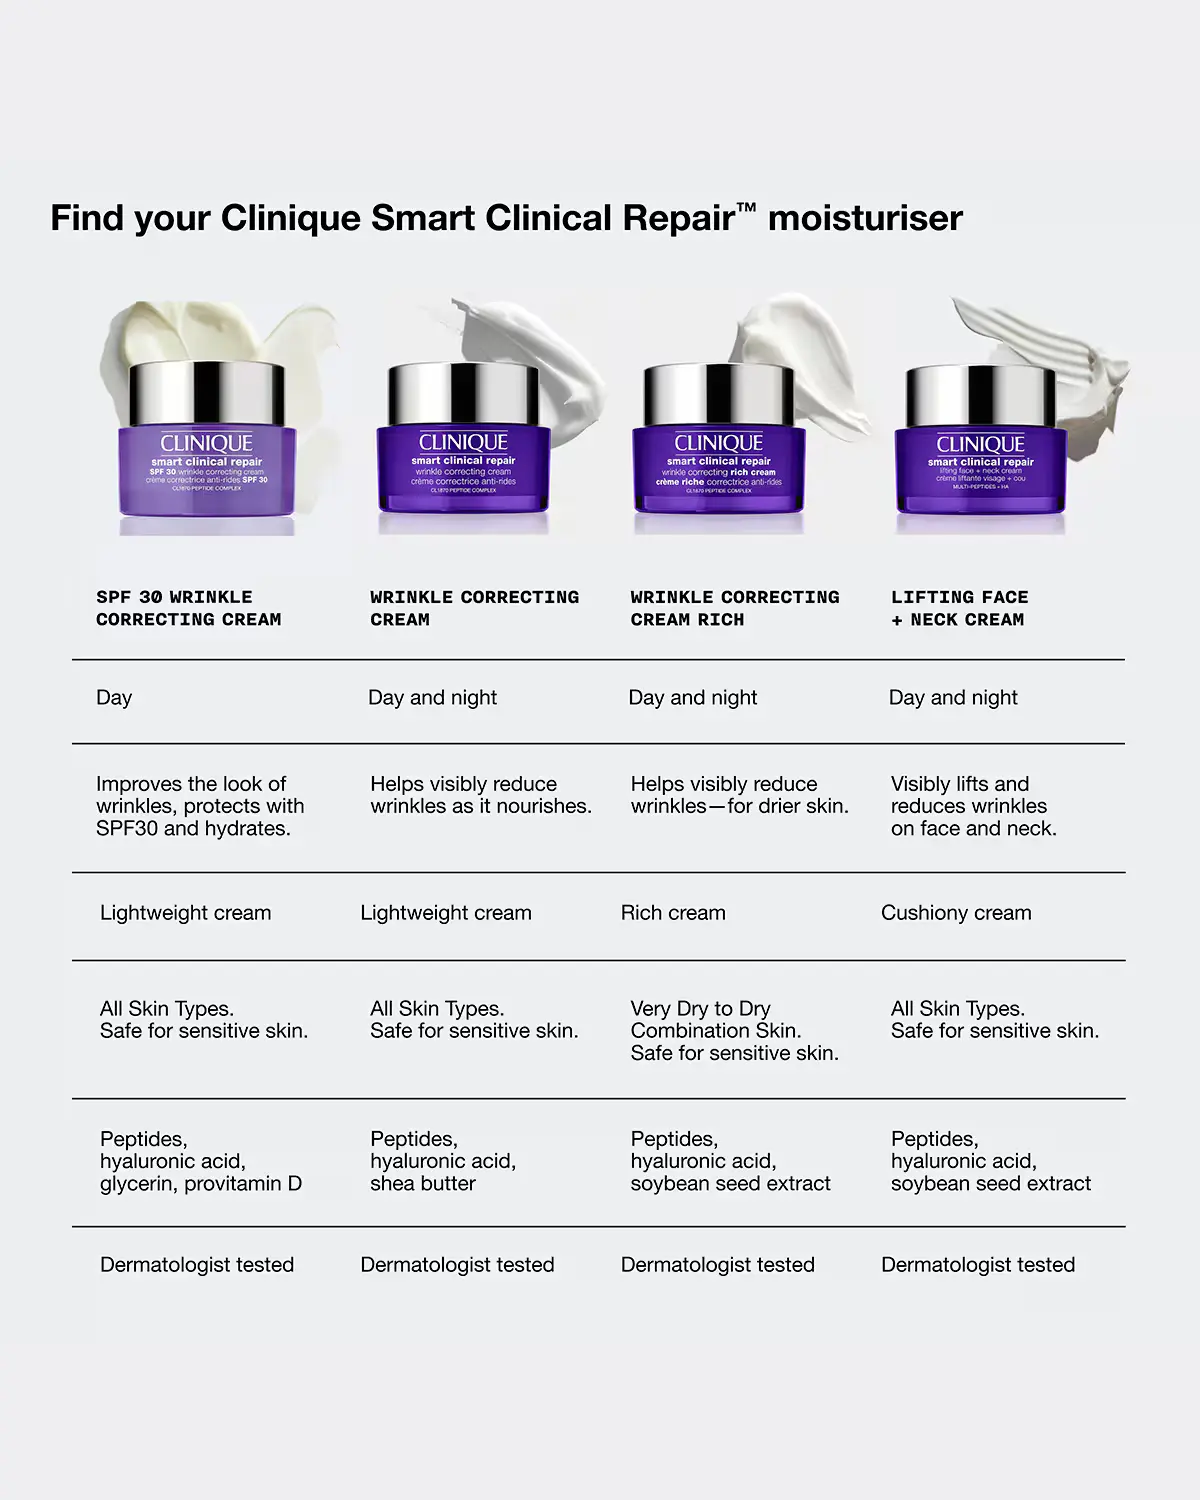 Clinique Smart Clinical moisturiser range